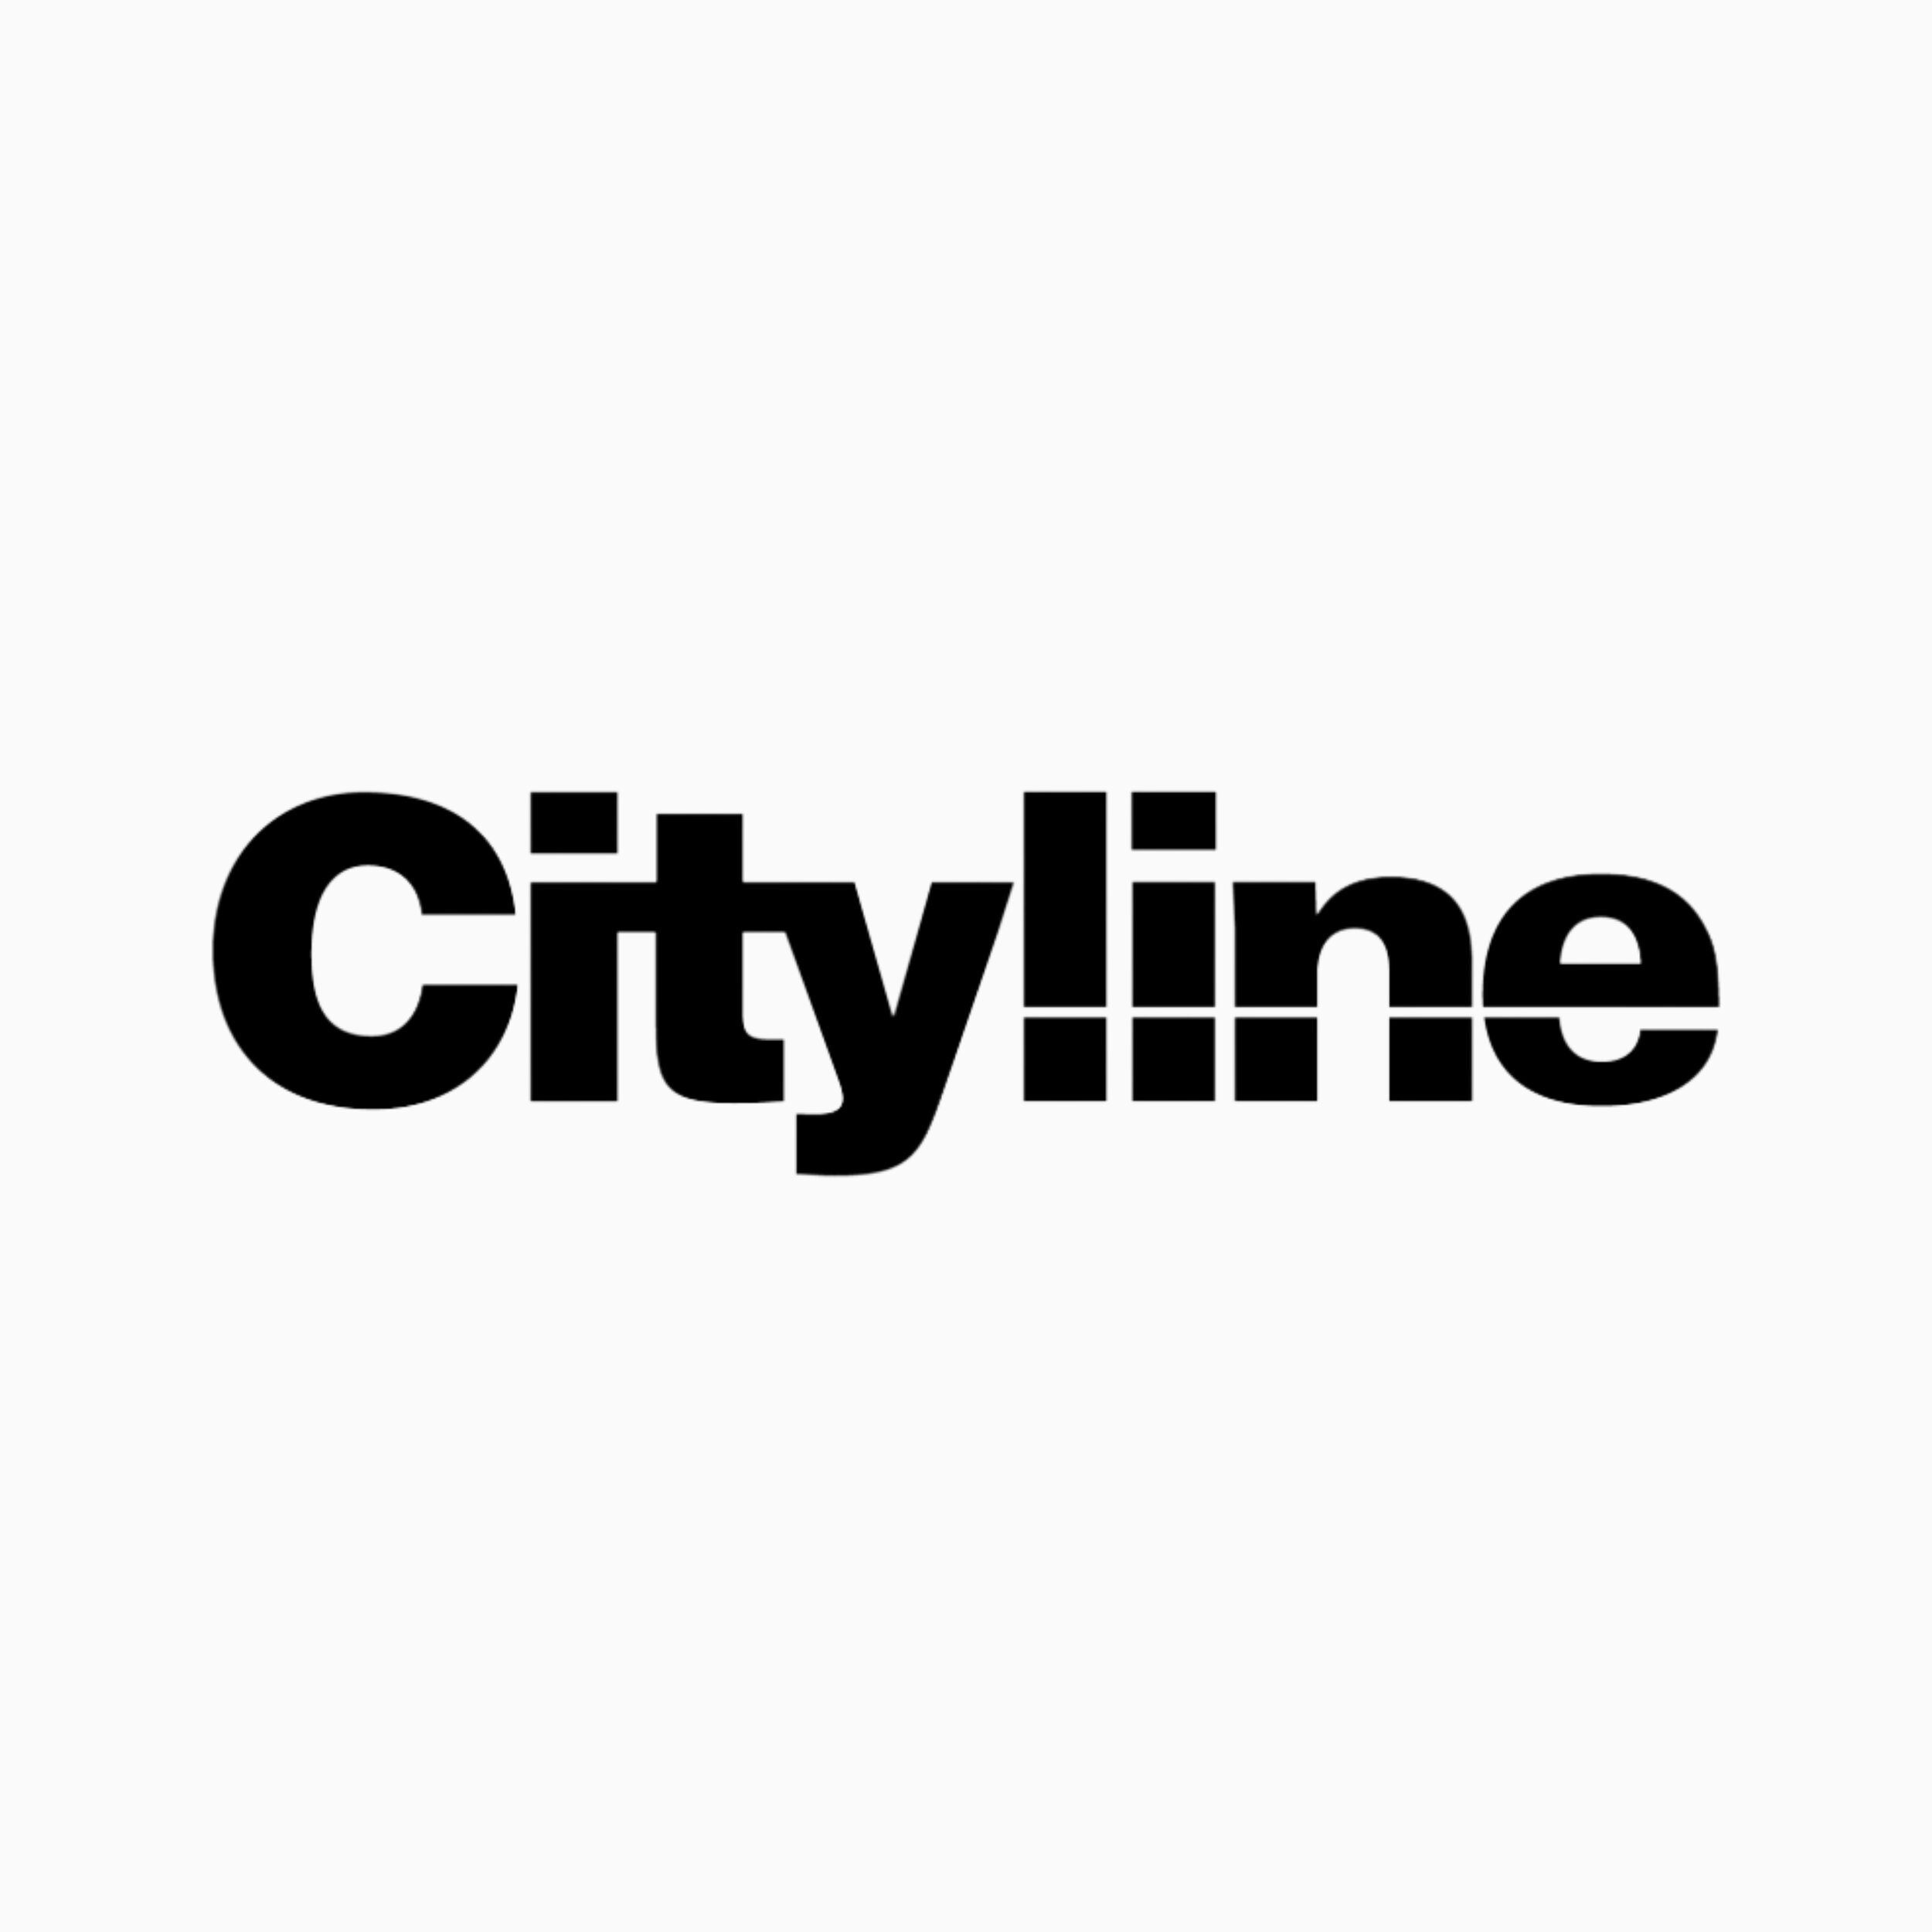 Cityline.jpg